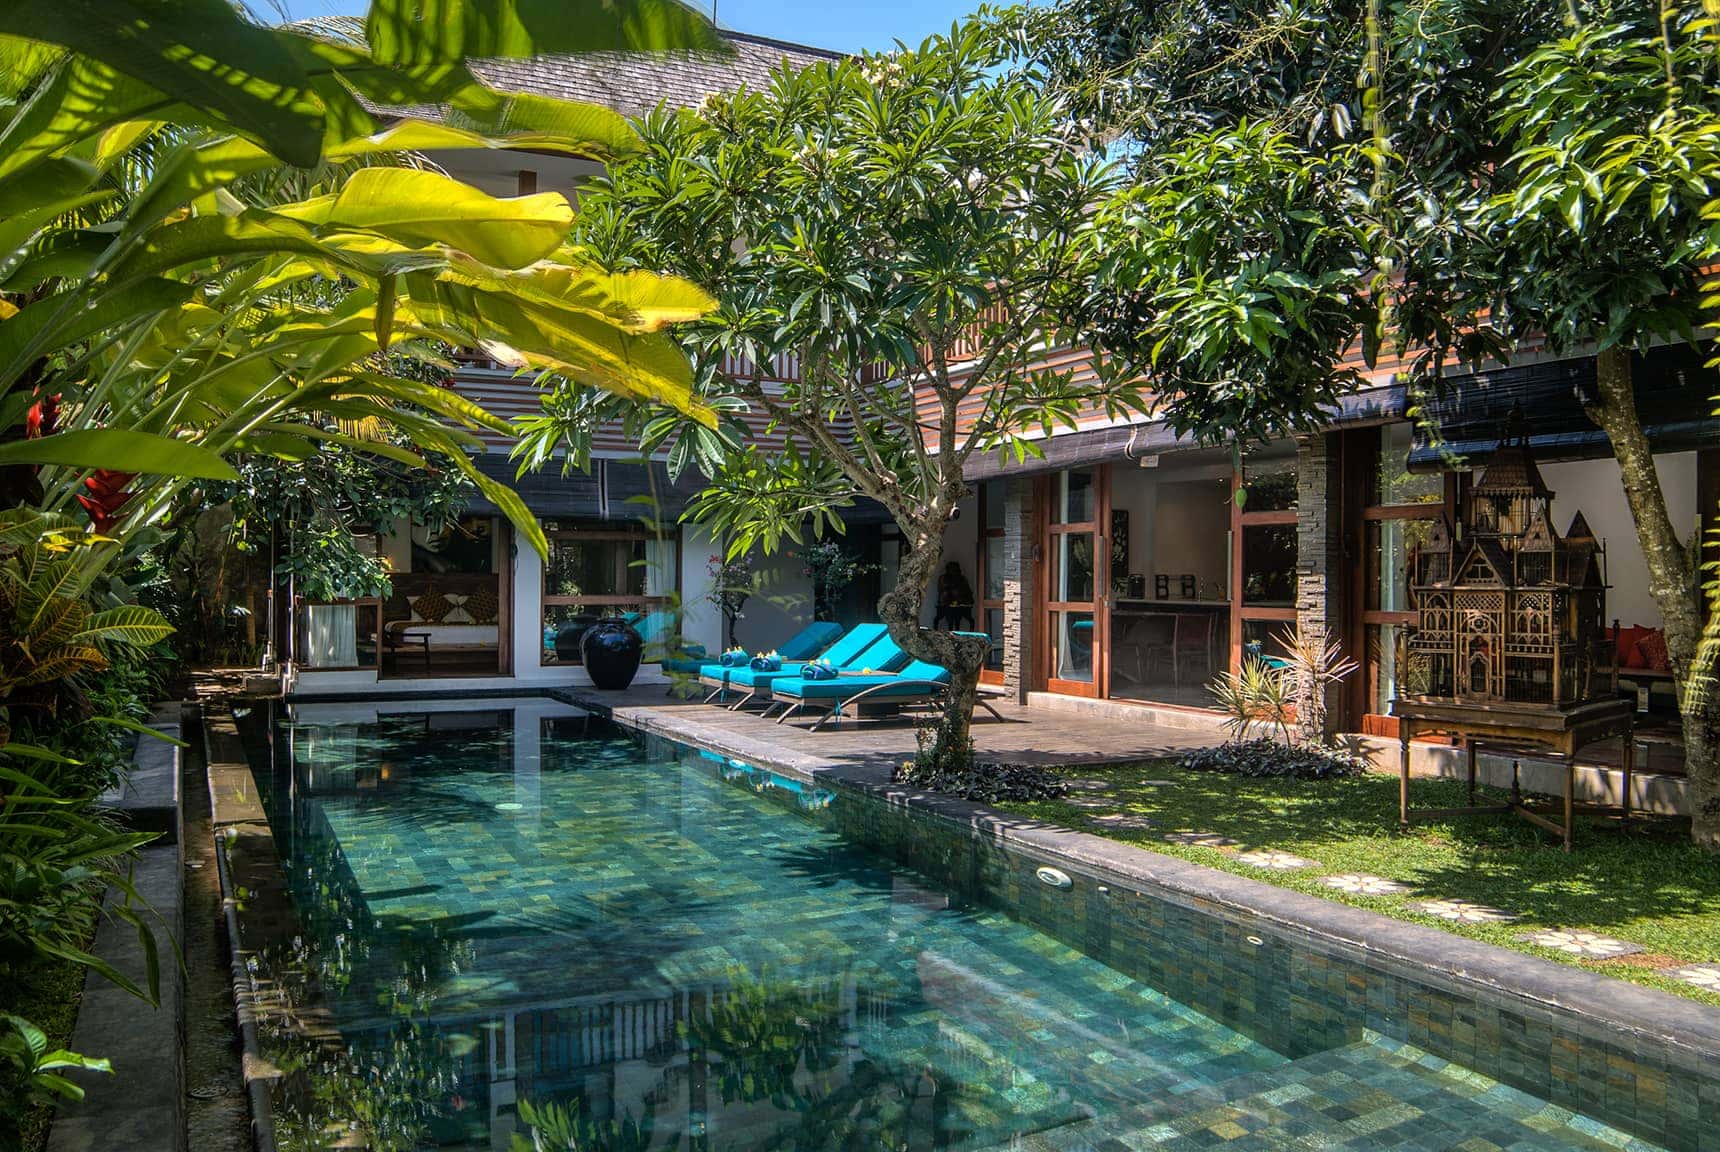 Villa Amira - Seminyak, Bali Indonesia (Bali villa photography by master photographer Rick Carmichael of LuxViz)